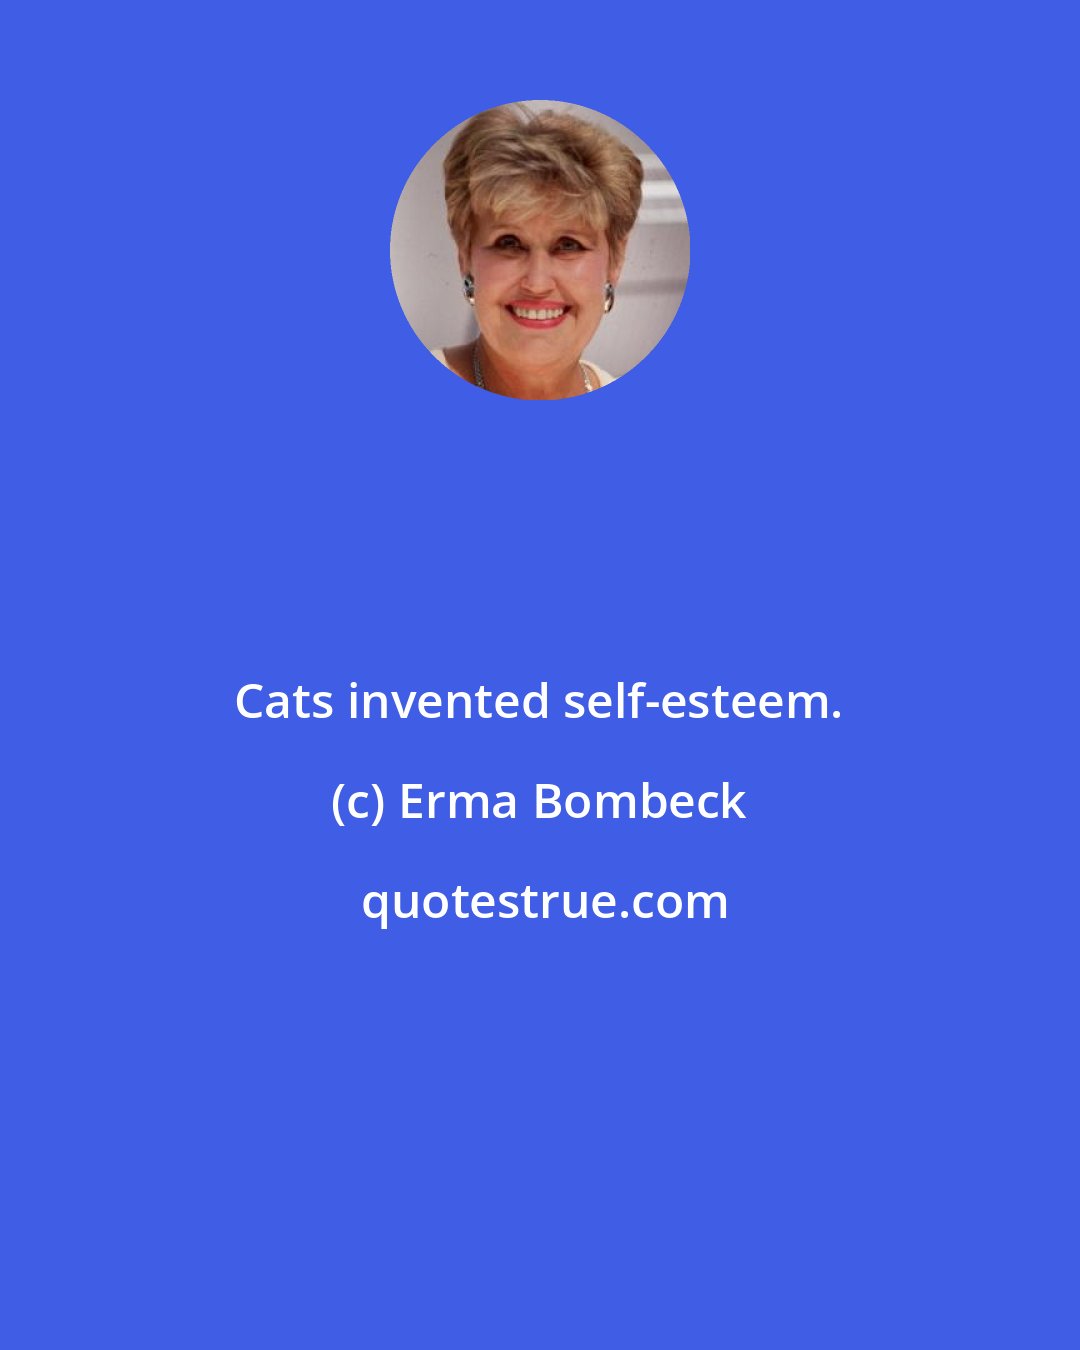 Erma Bombeck: Cats invented self-esteem.